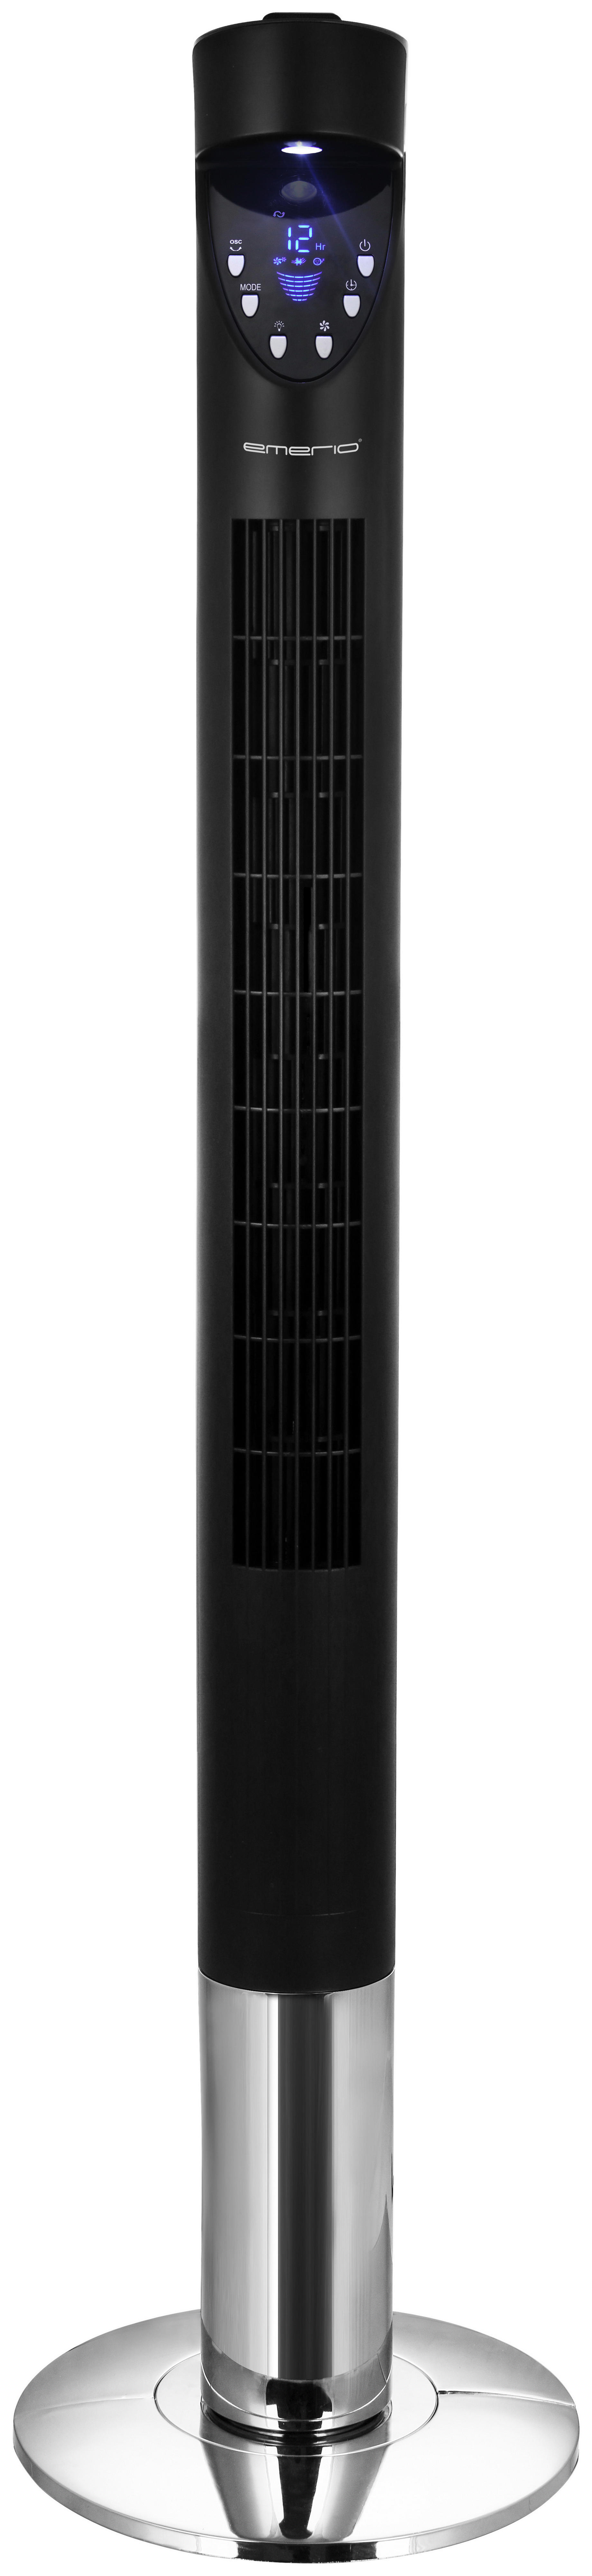 Emerio Turmventilator TFN-114569.4 schwarz Kunststoff B/H/T: ca. 32x119x32 cm Turmventilator TFN-114569.4 - schwarz/Edelstahloptik (32,00/119,00/32,00cm)